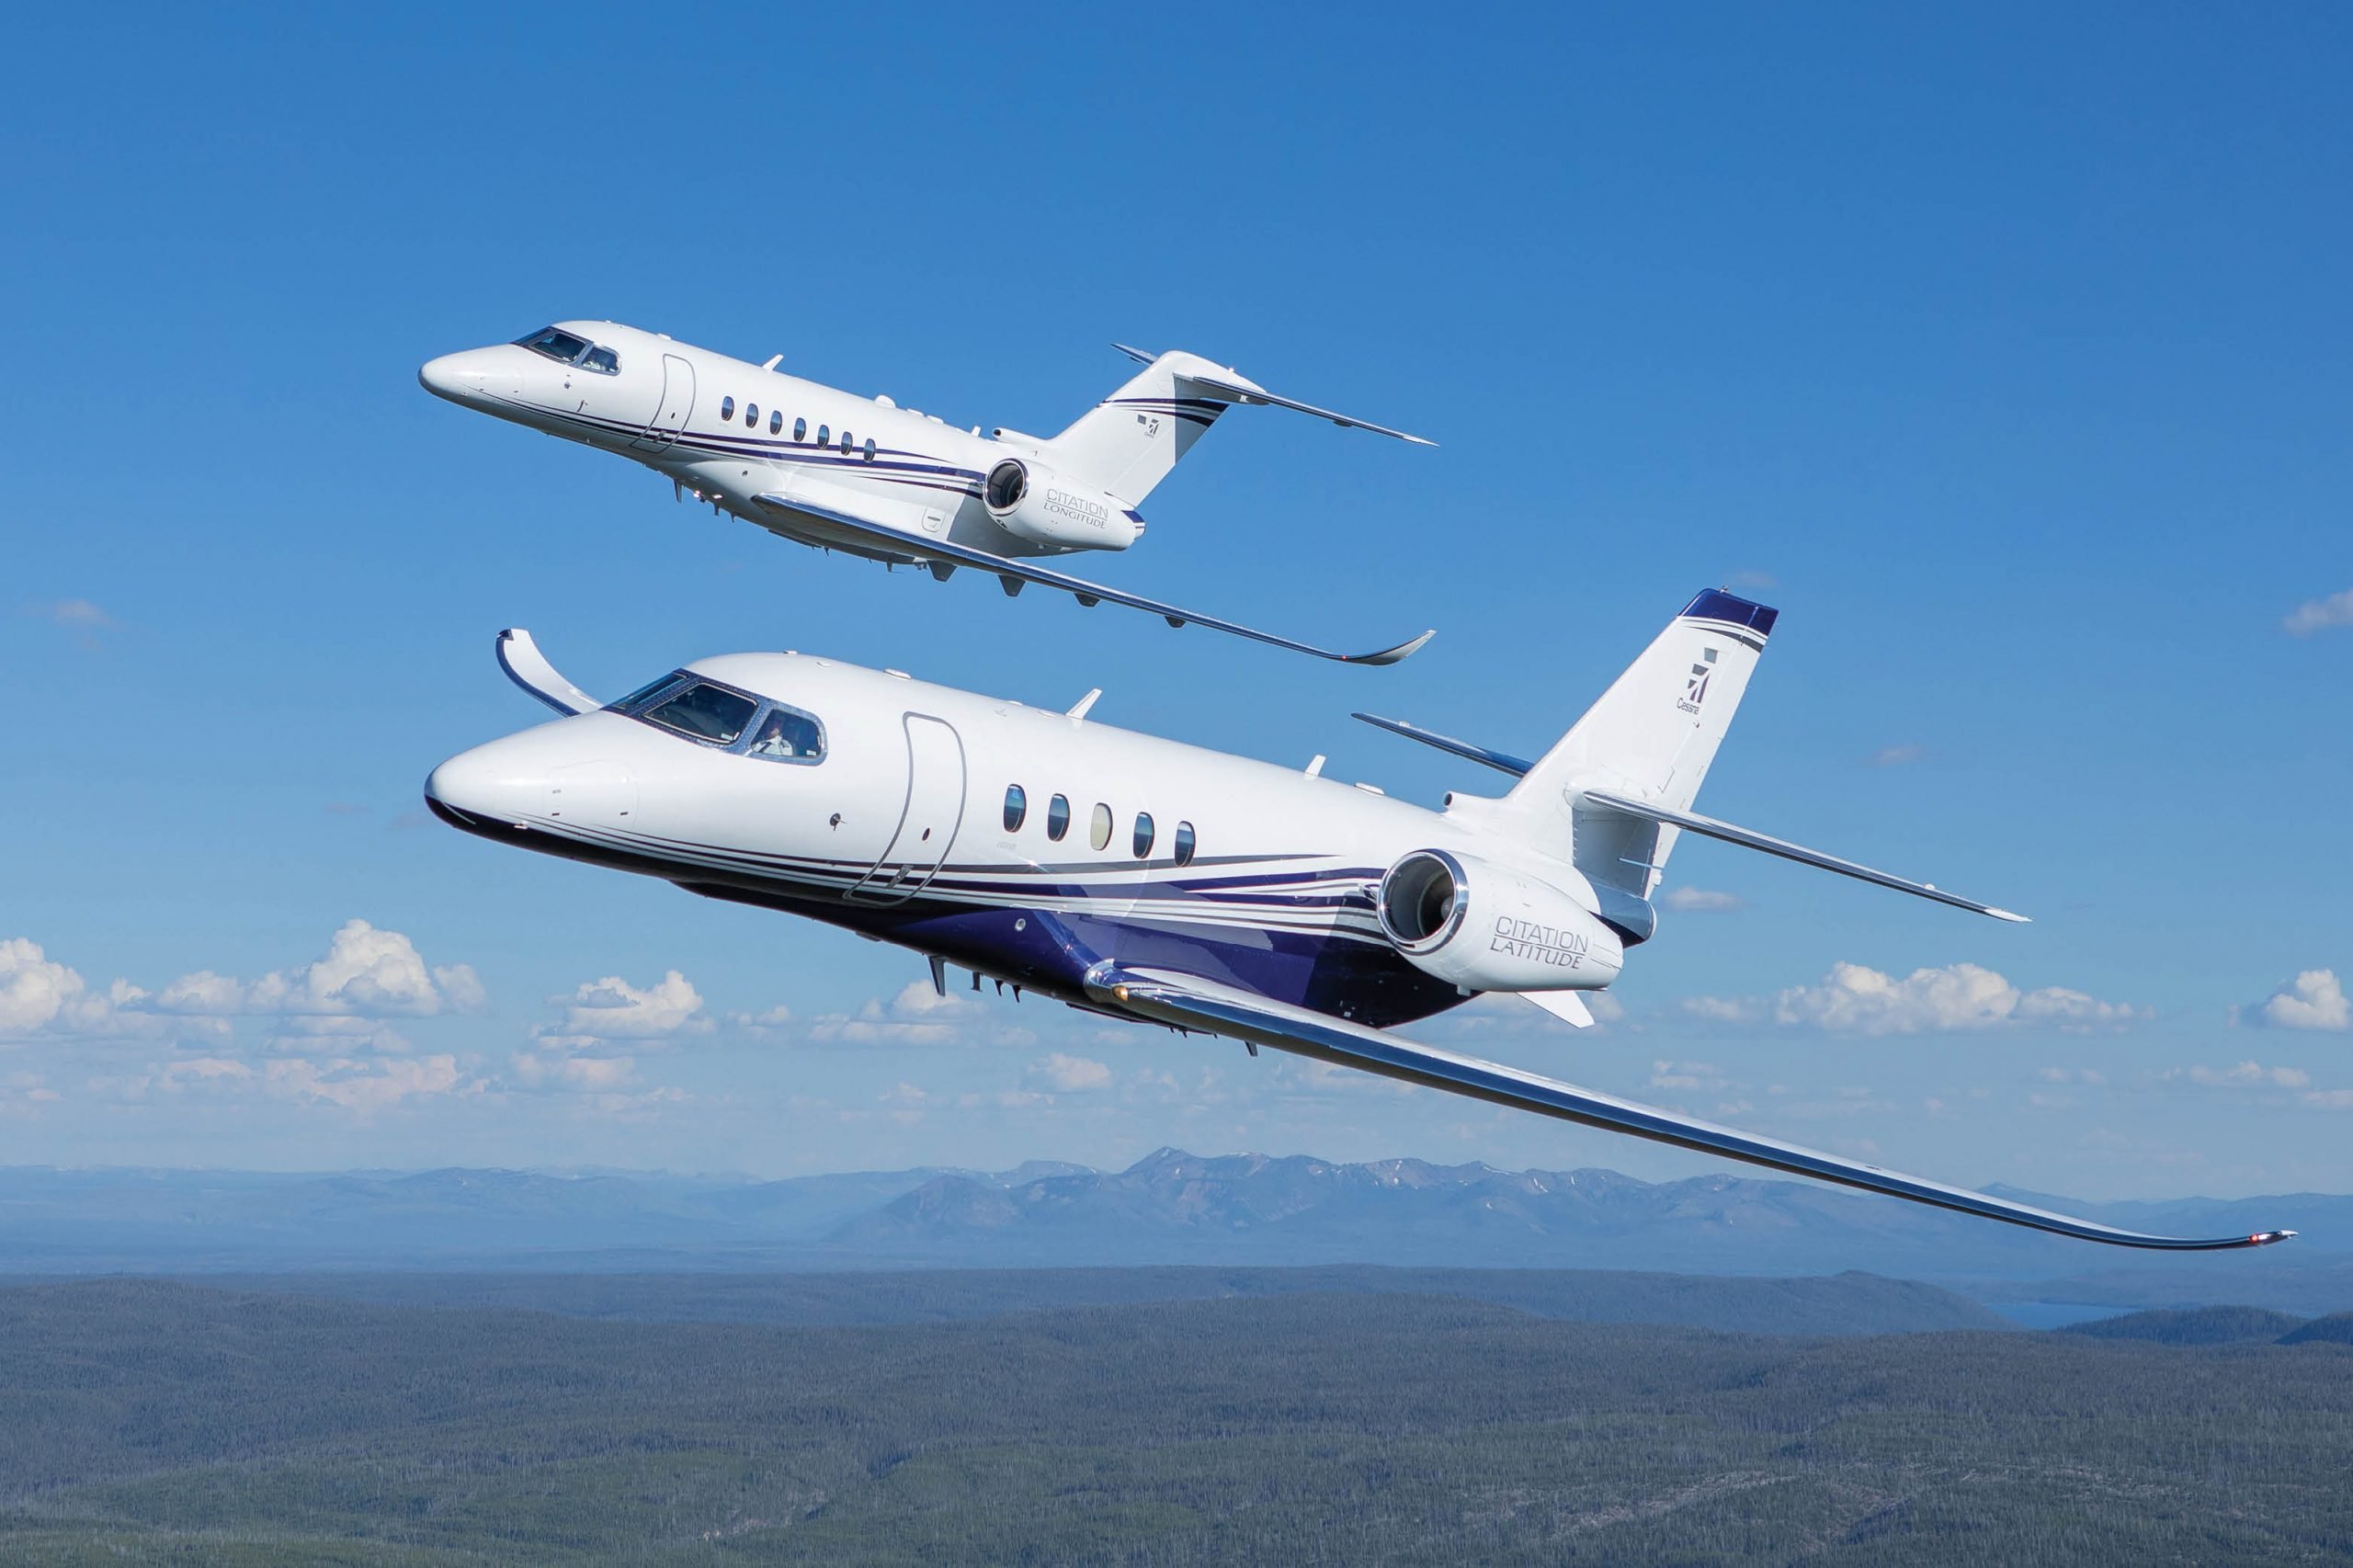 Textron Aviation airplanes